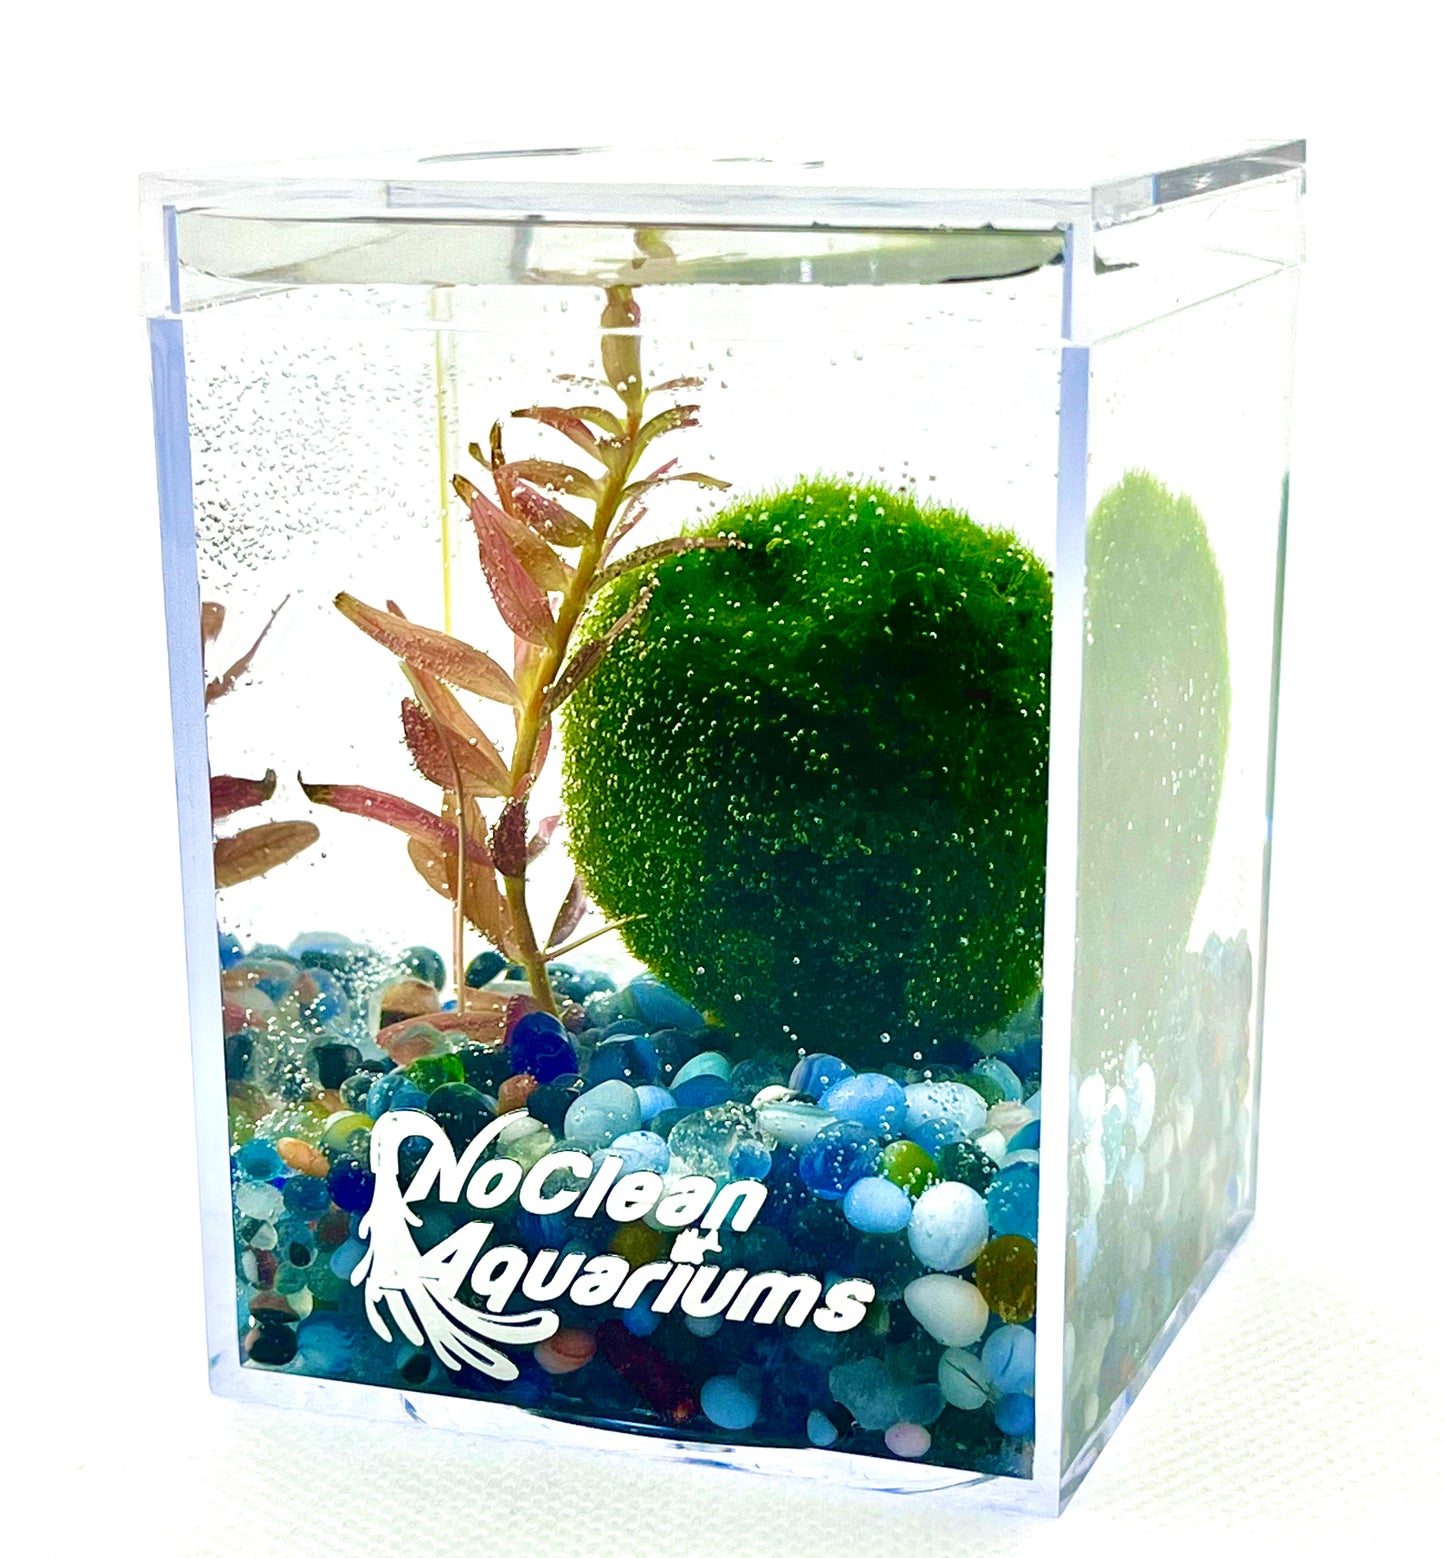 3 Live Marimo Moss Ball | Aquarium Decoration | Not Fake | Farm Grown Indoors